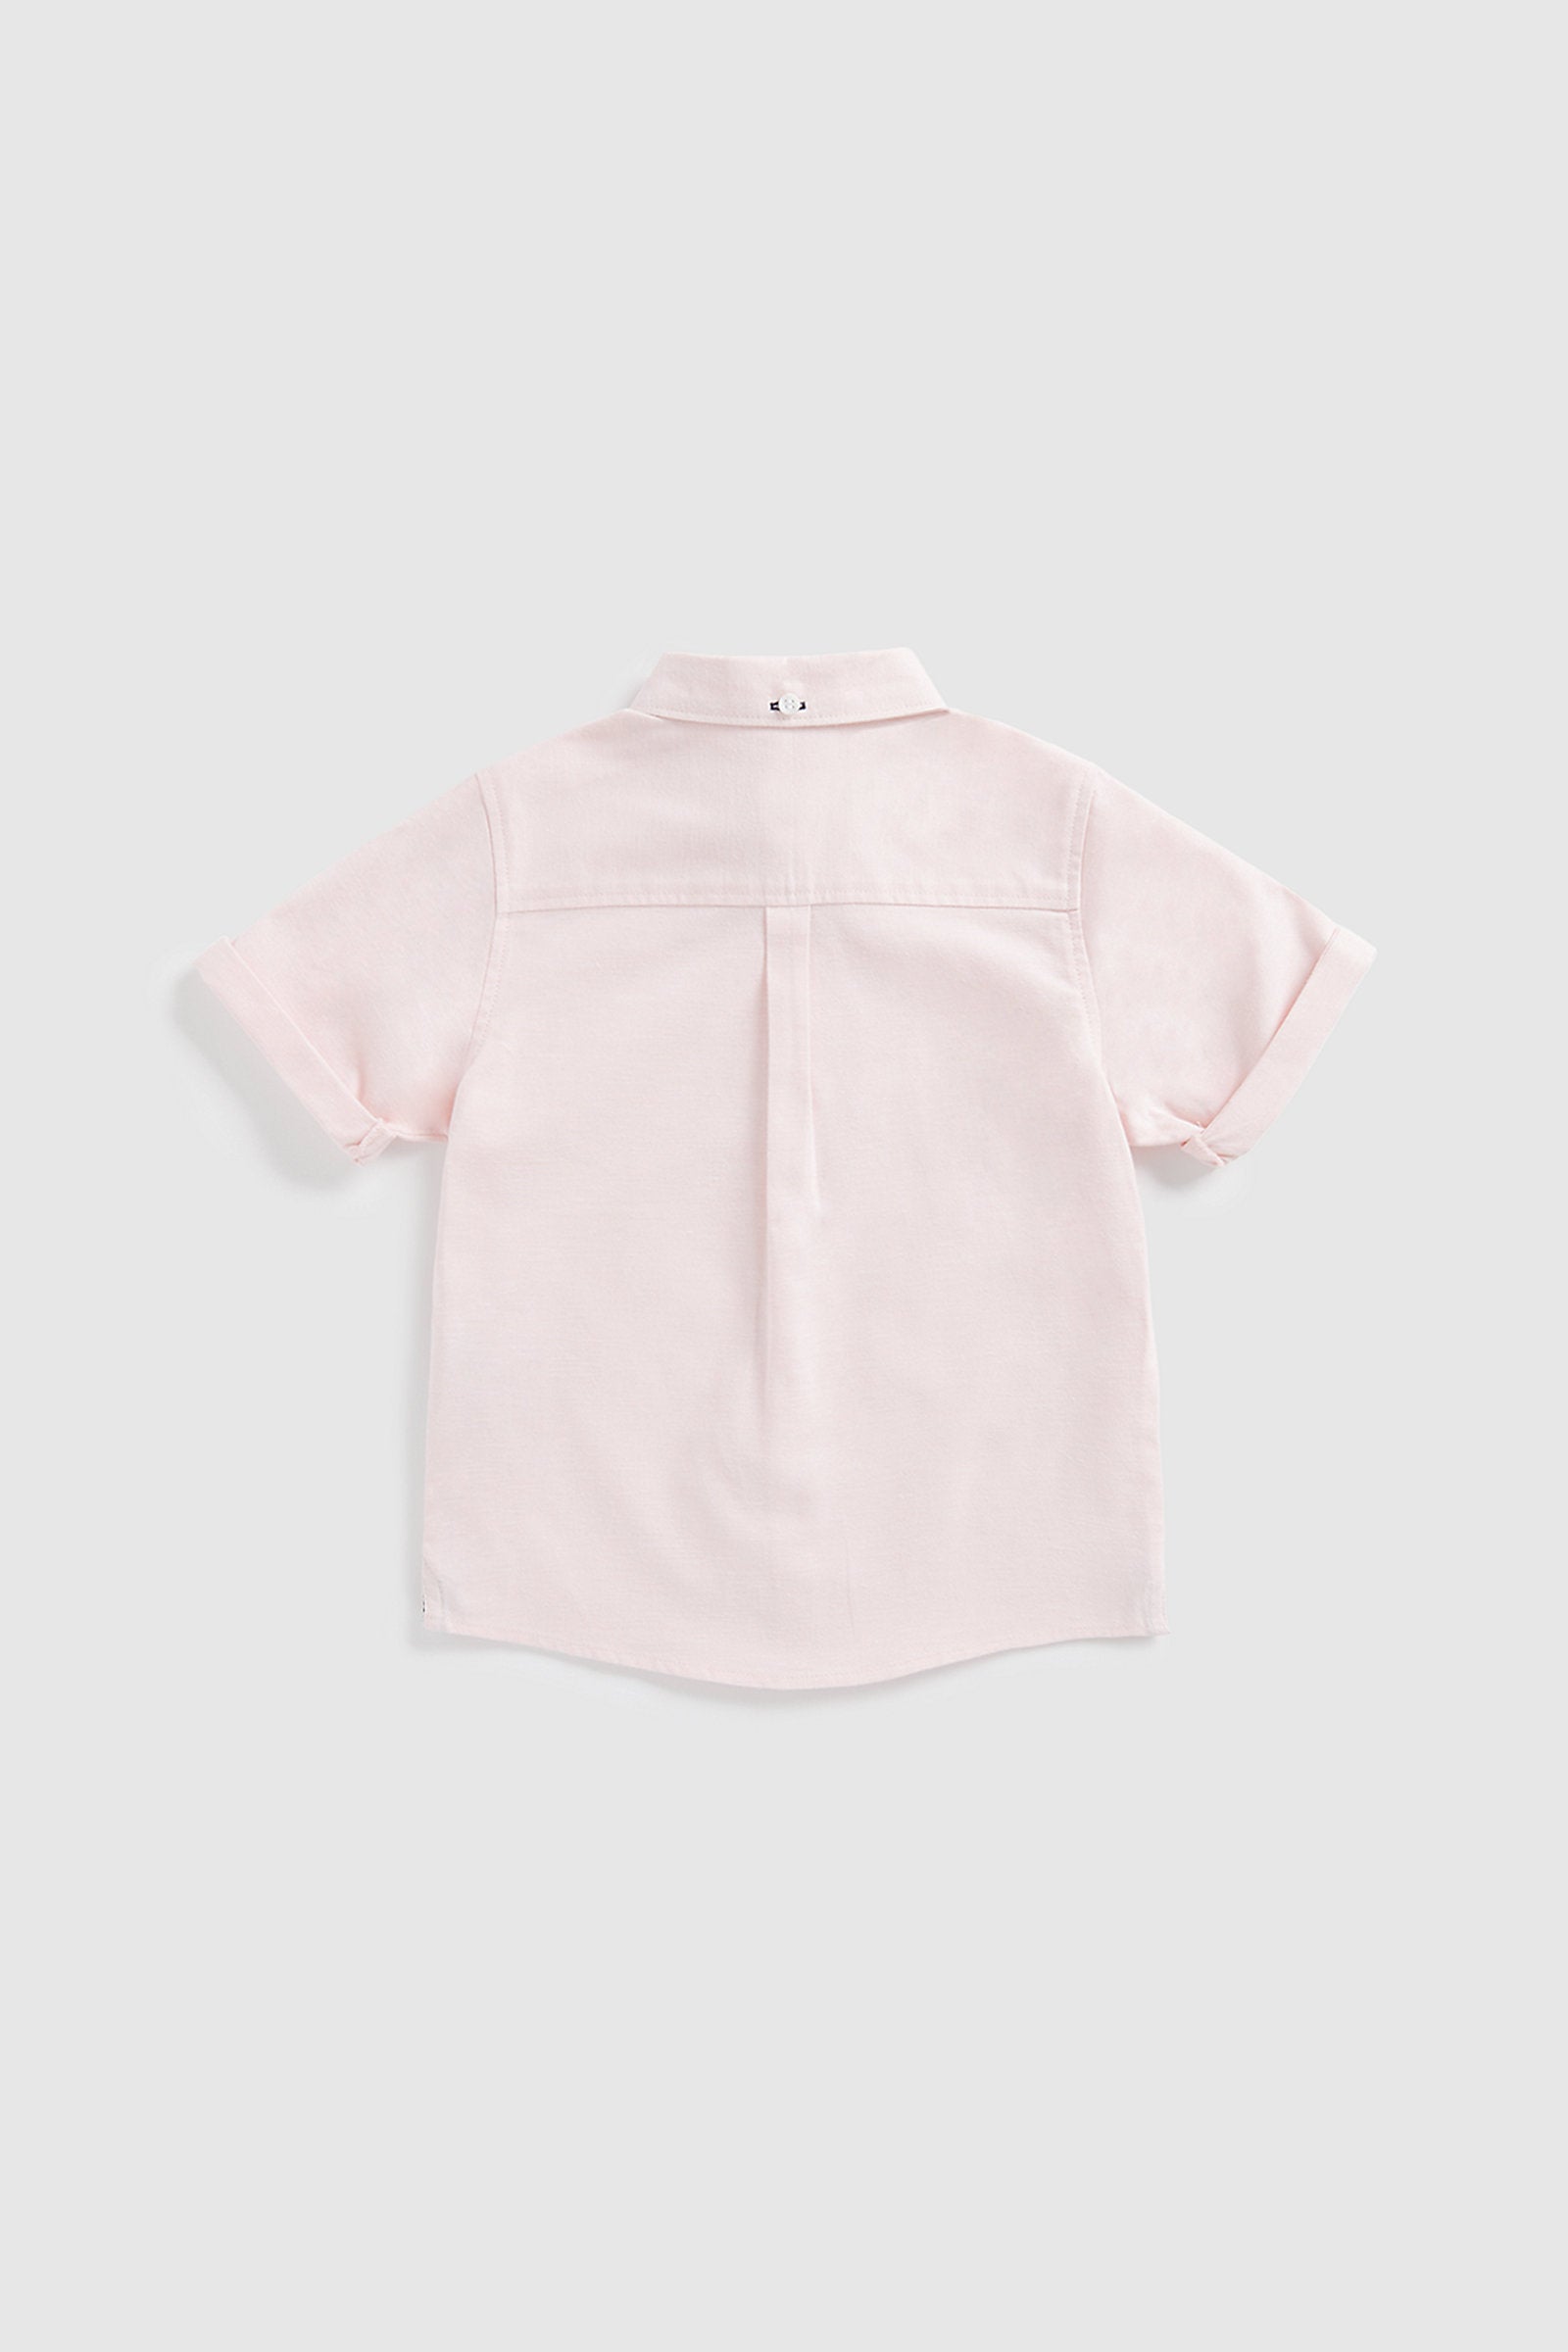 Mothercare Pink Oxford Shirt